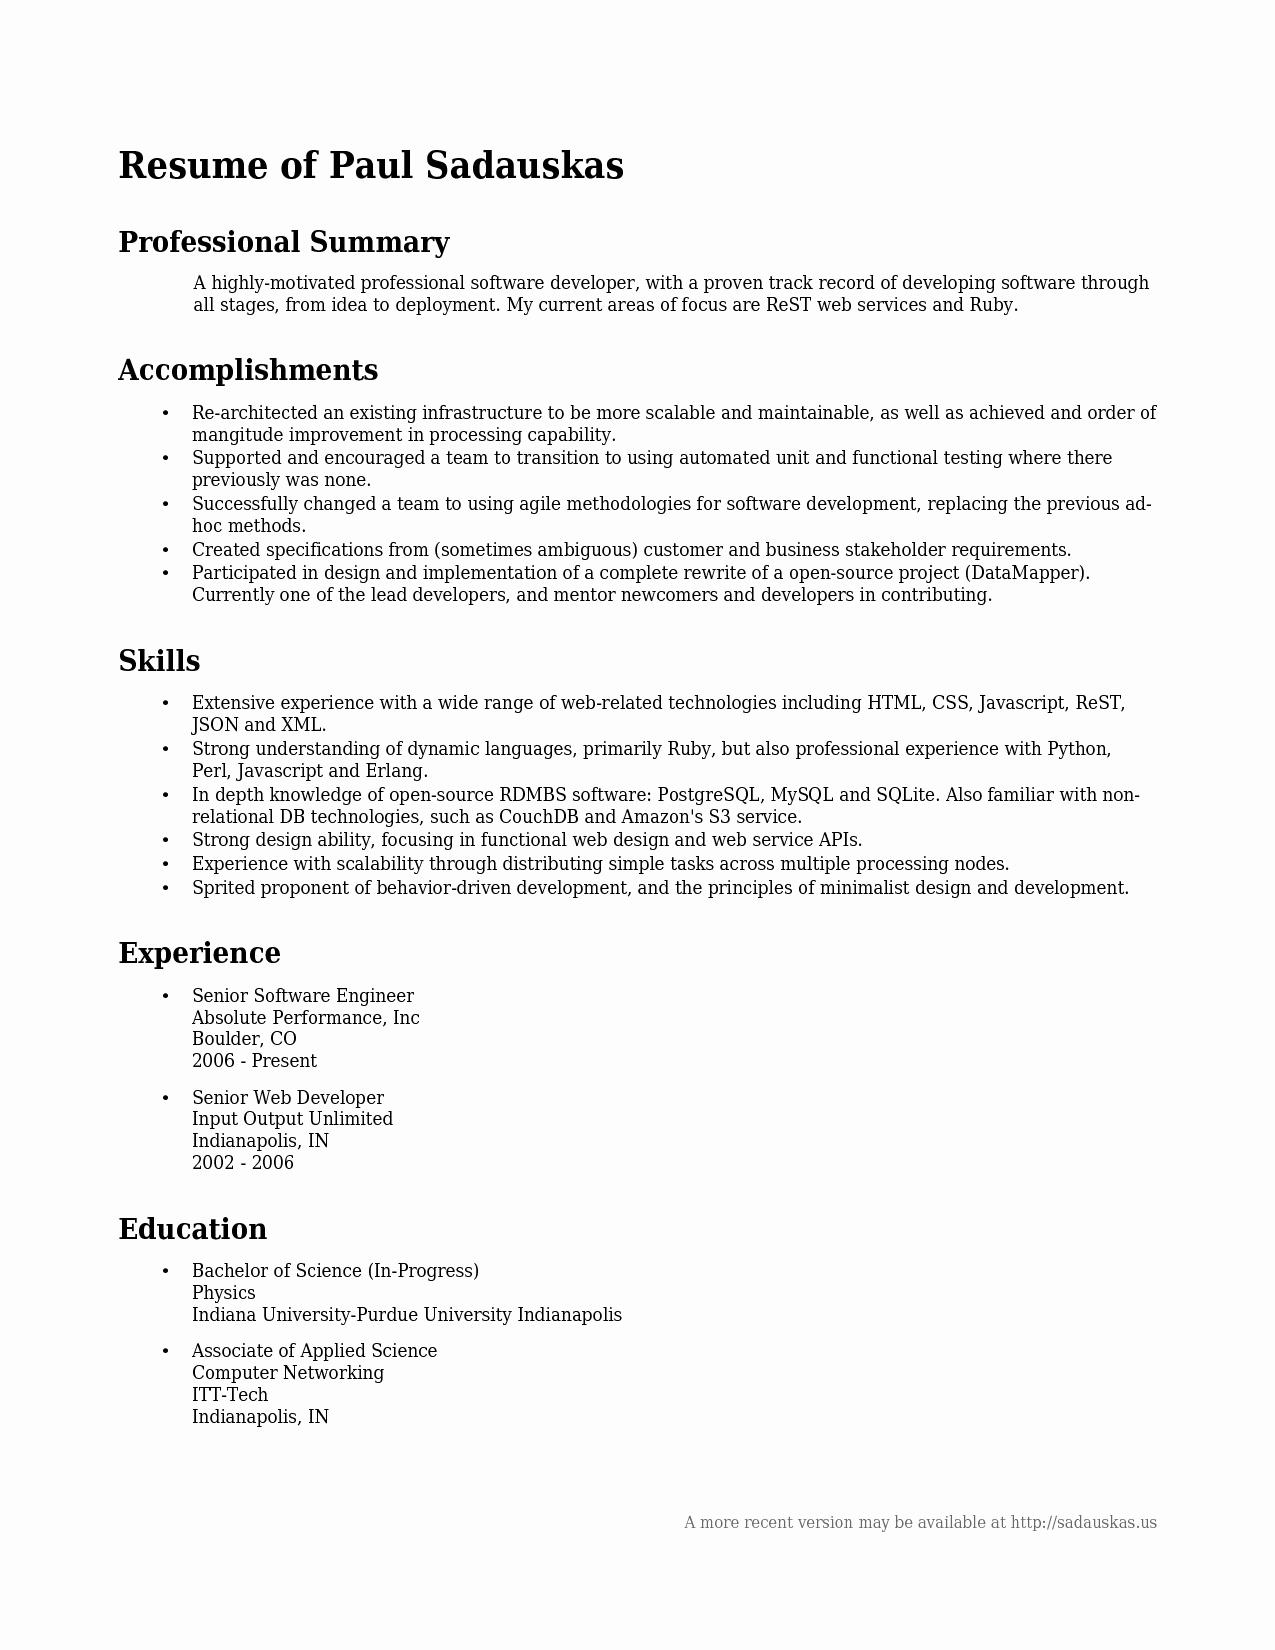 Professional Resume Summary 2016 Samplebusinessresume